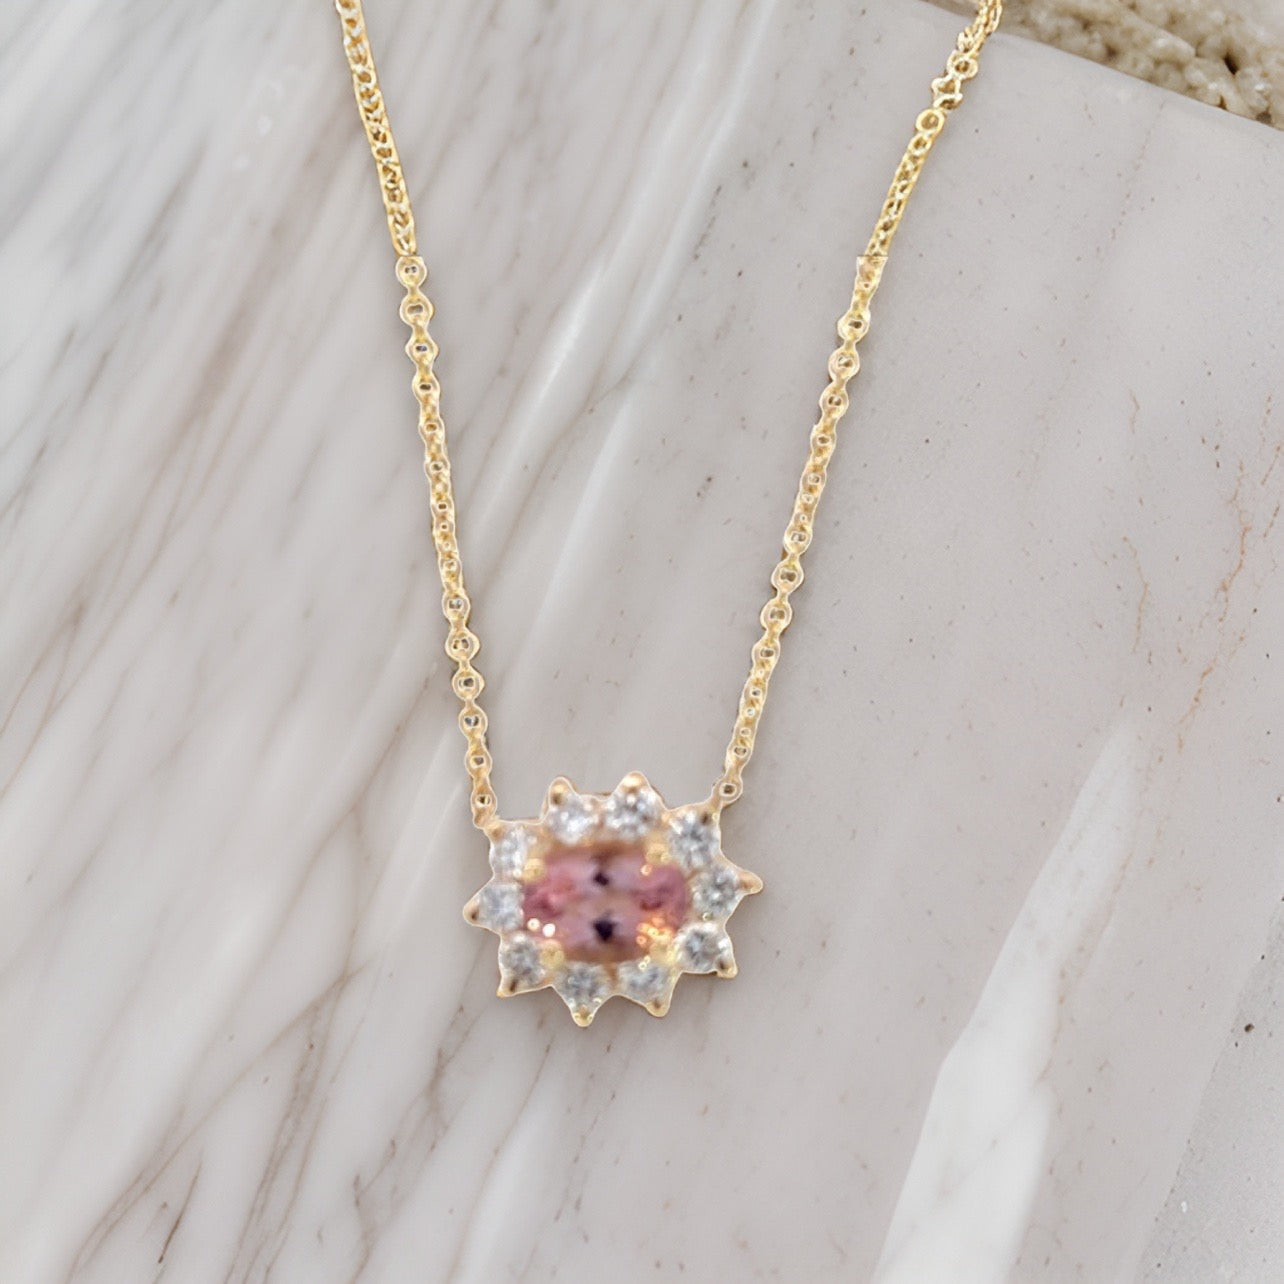 Natural Tourmaline Diamond Pendant Necklace 18" 14k YG 1.52 TCW Certified $3,450 311010 - Certified Fine Jewelry